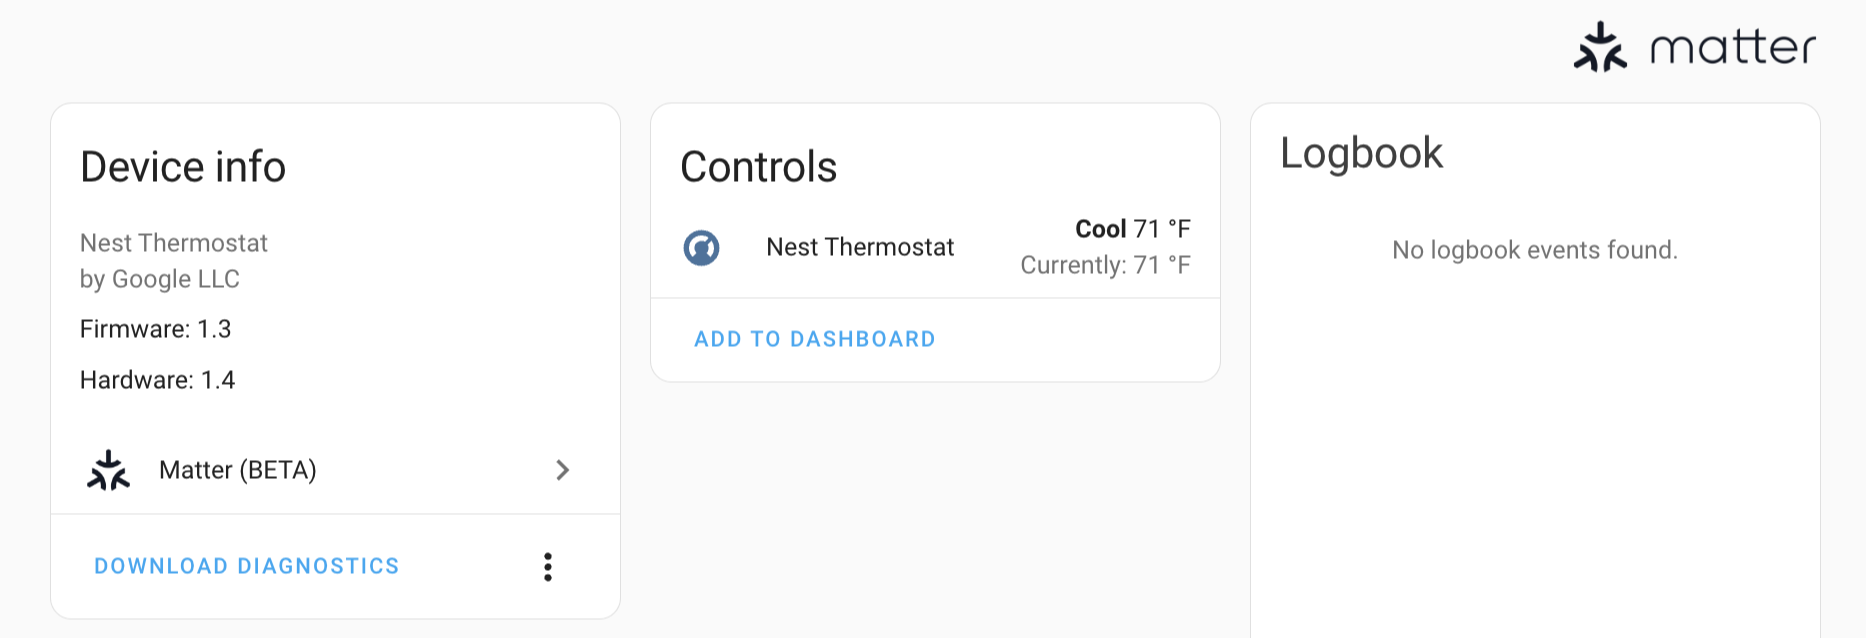 matter climate nest thermostat